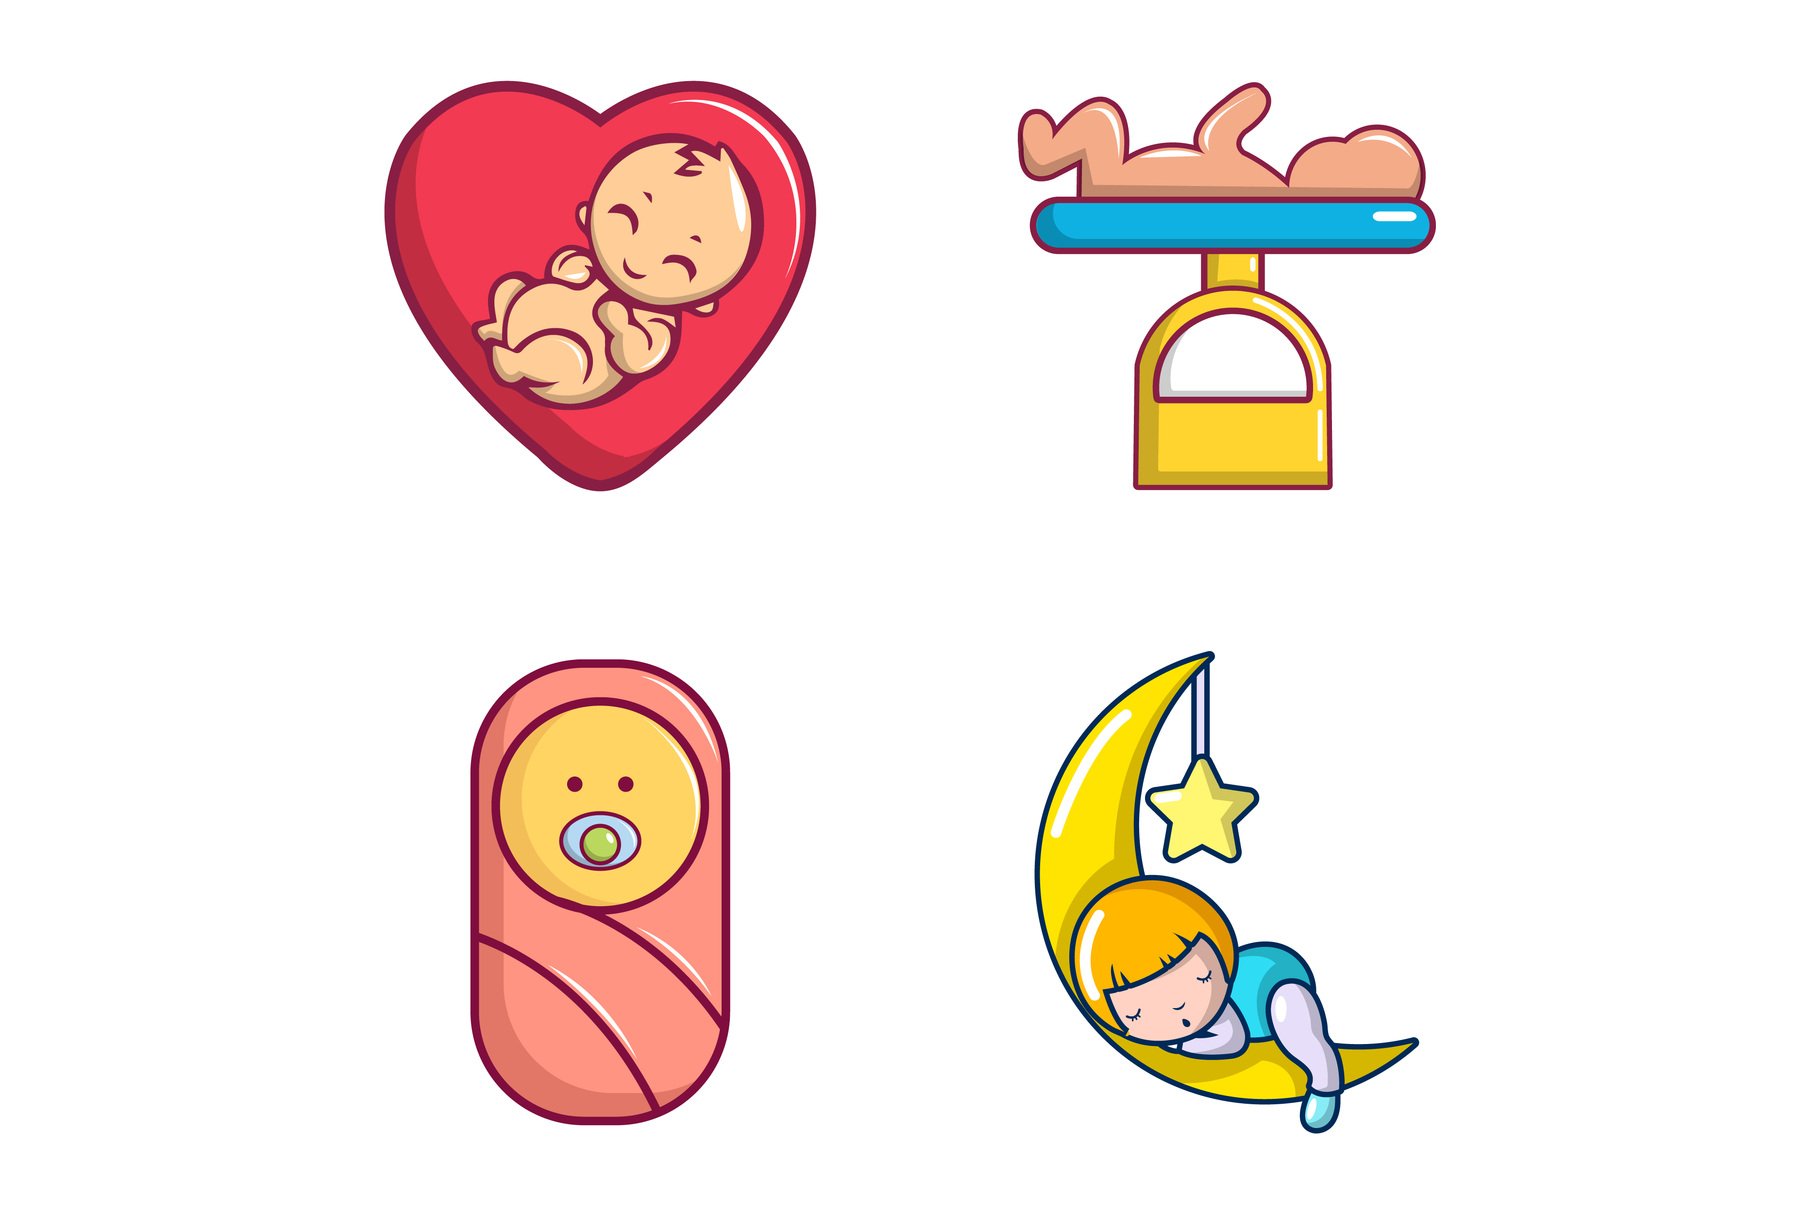 Baby icon set, cartoon style cover image.